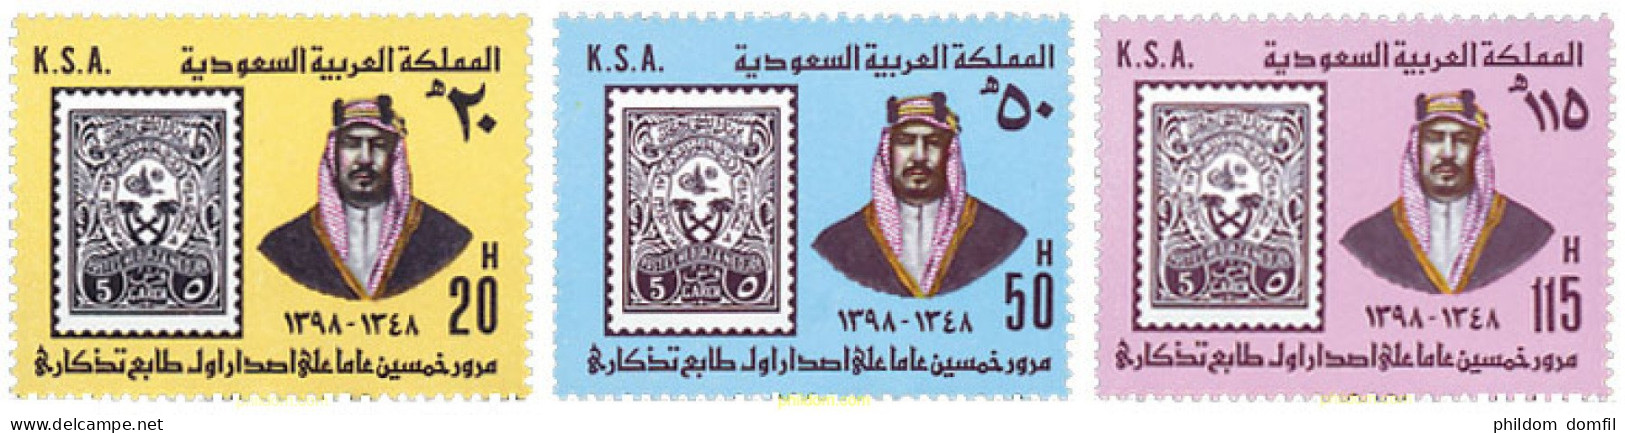 162063 MNH ARABIA SAUDITA 1979 DIA DEL SELLO - Saudi Arabia